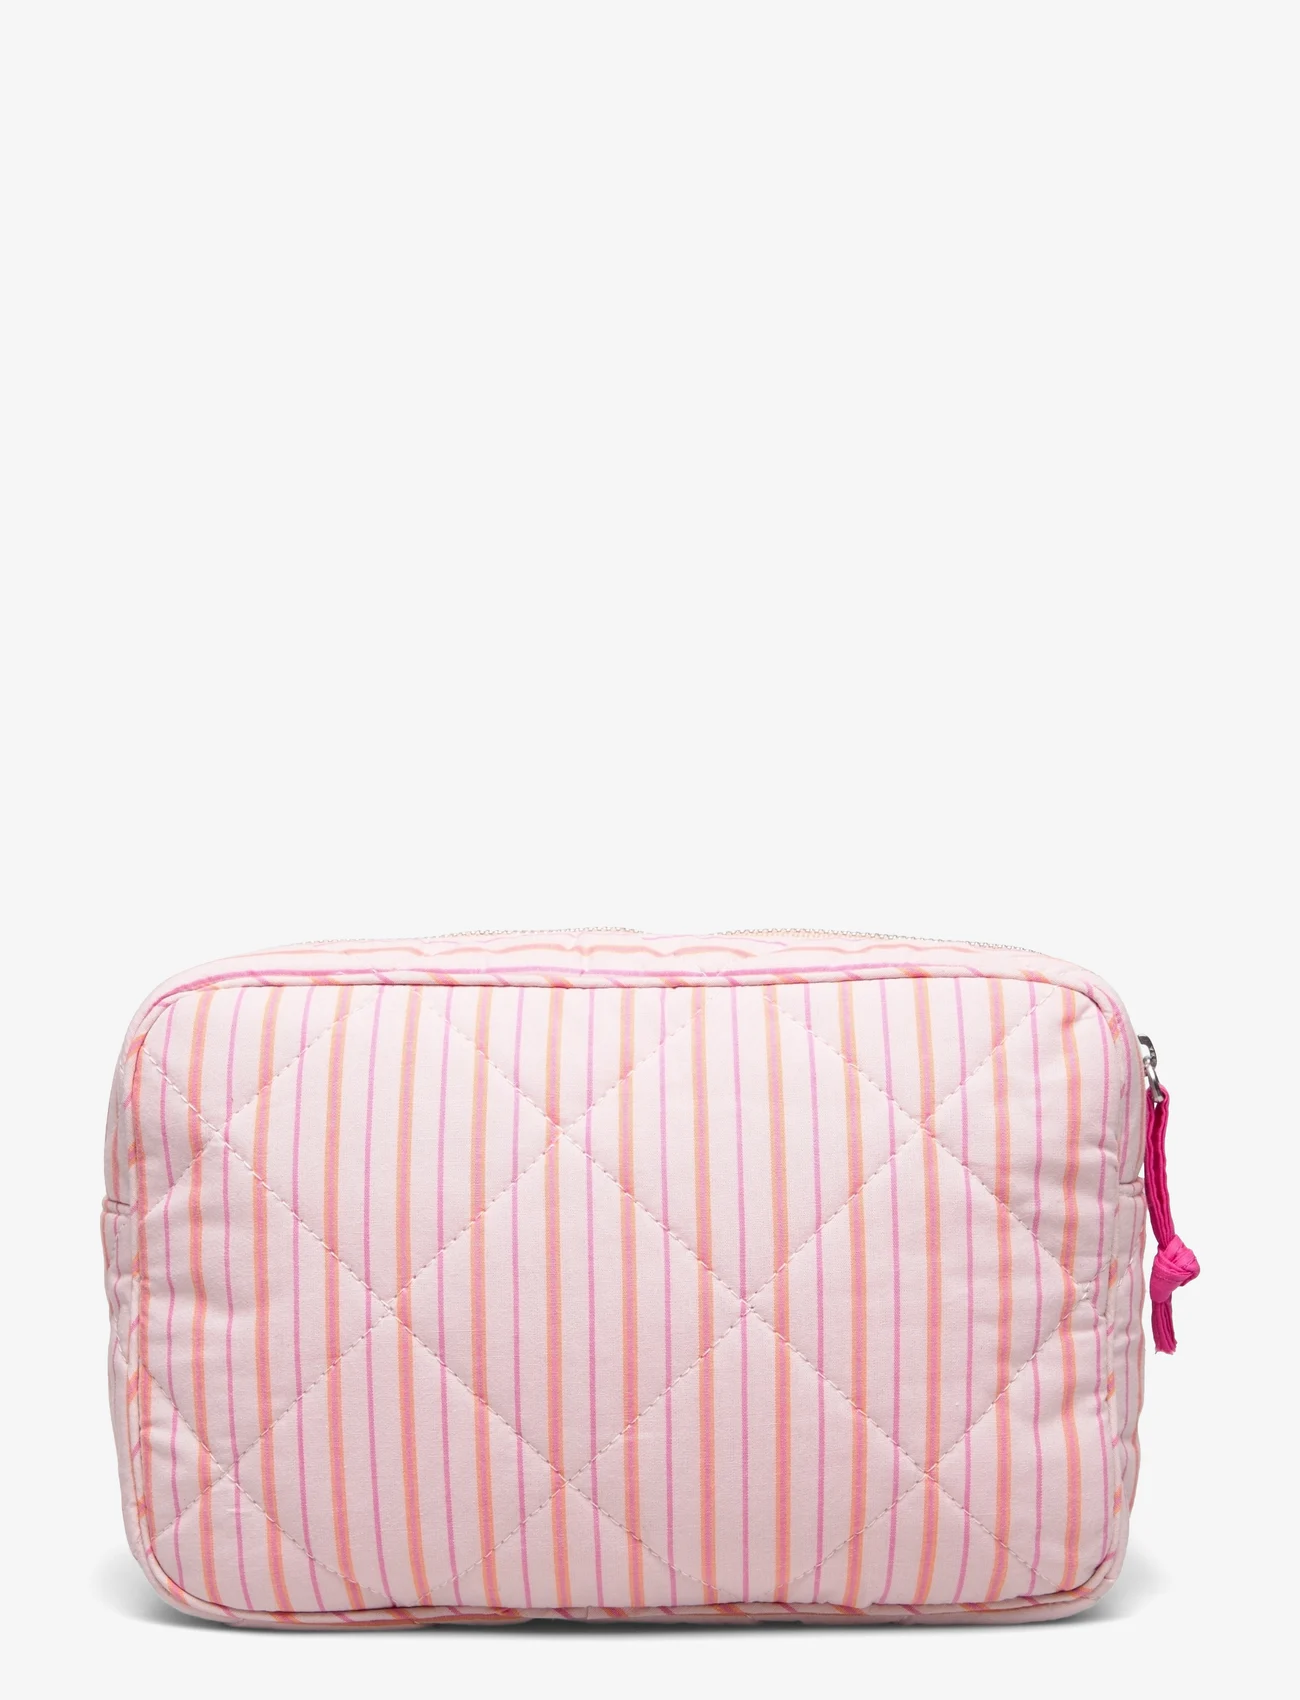 Becksöndergaard - Stripel Mini Malin Bag - madalaimad hinnad - peach whip pink - 1